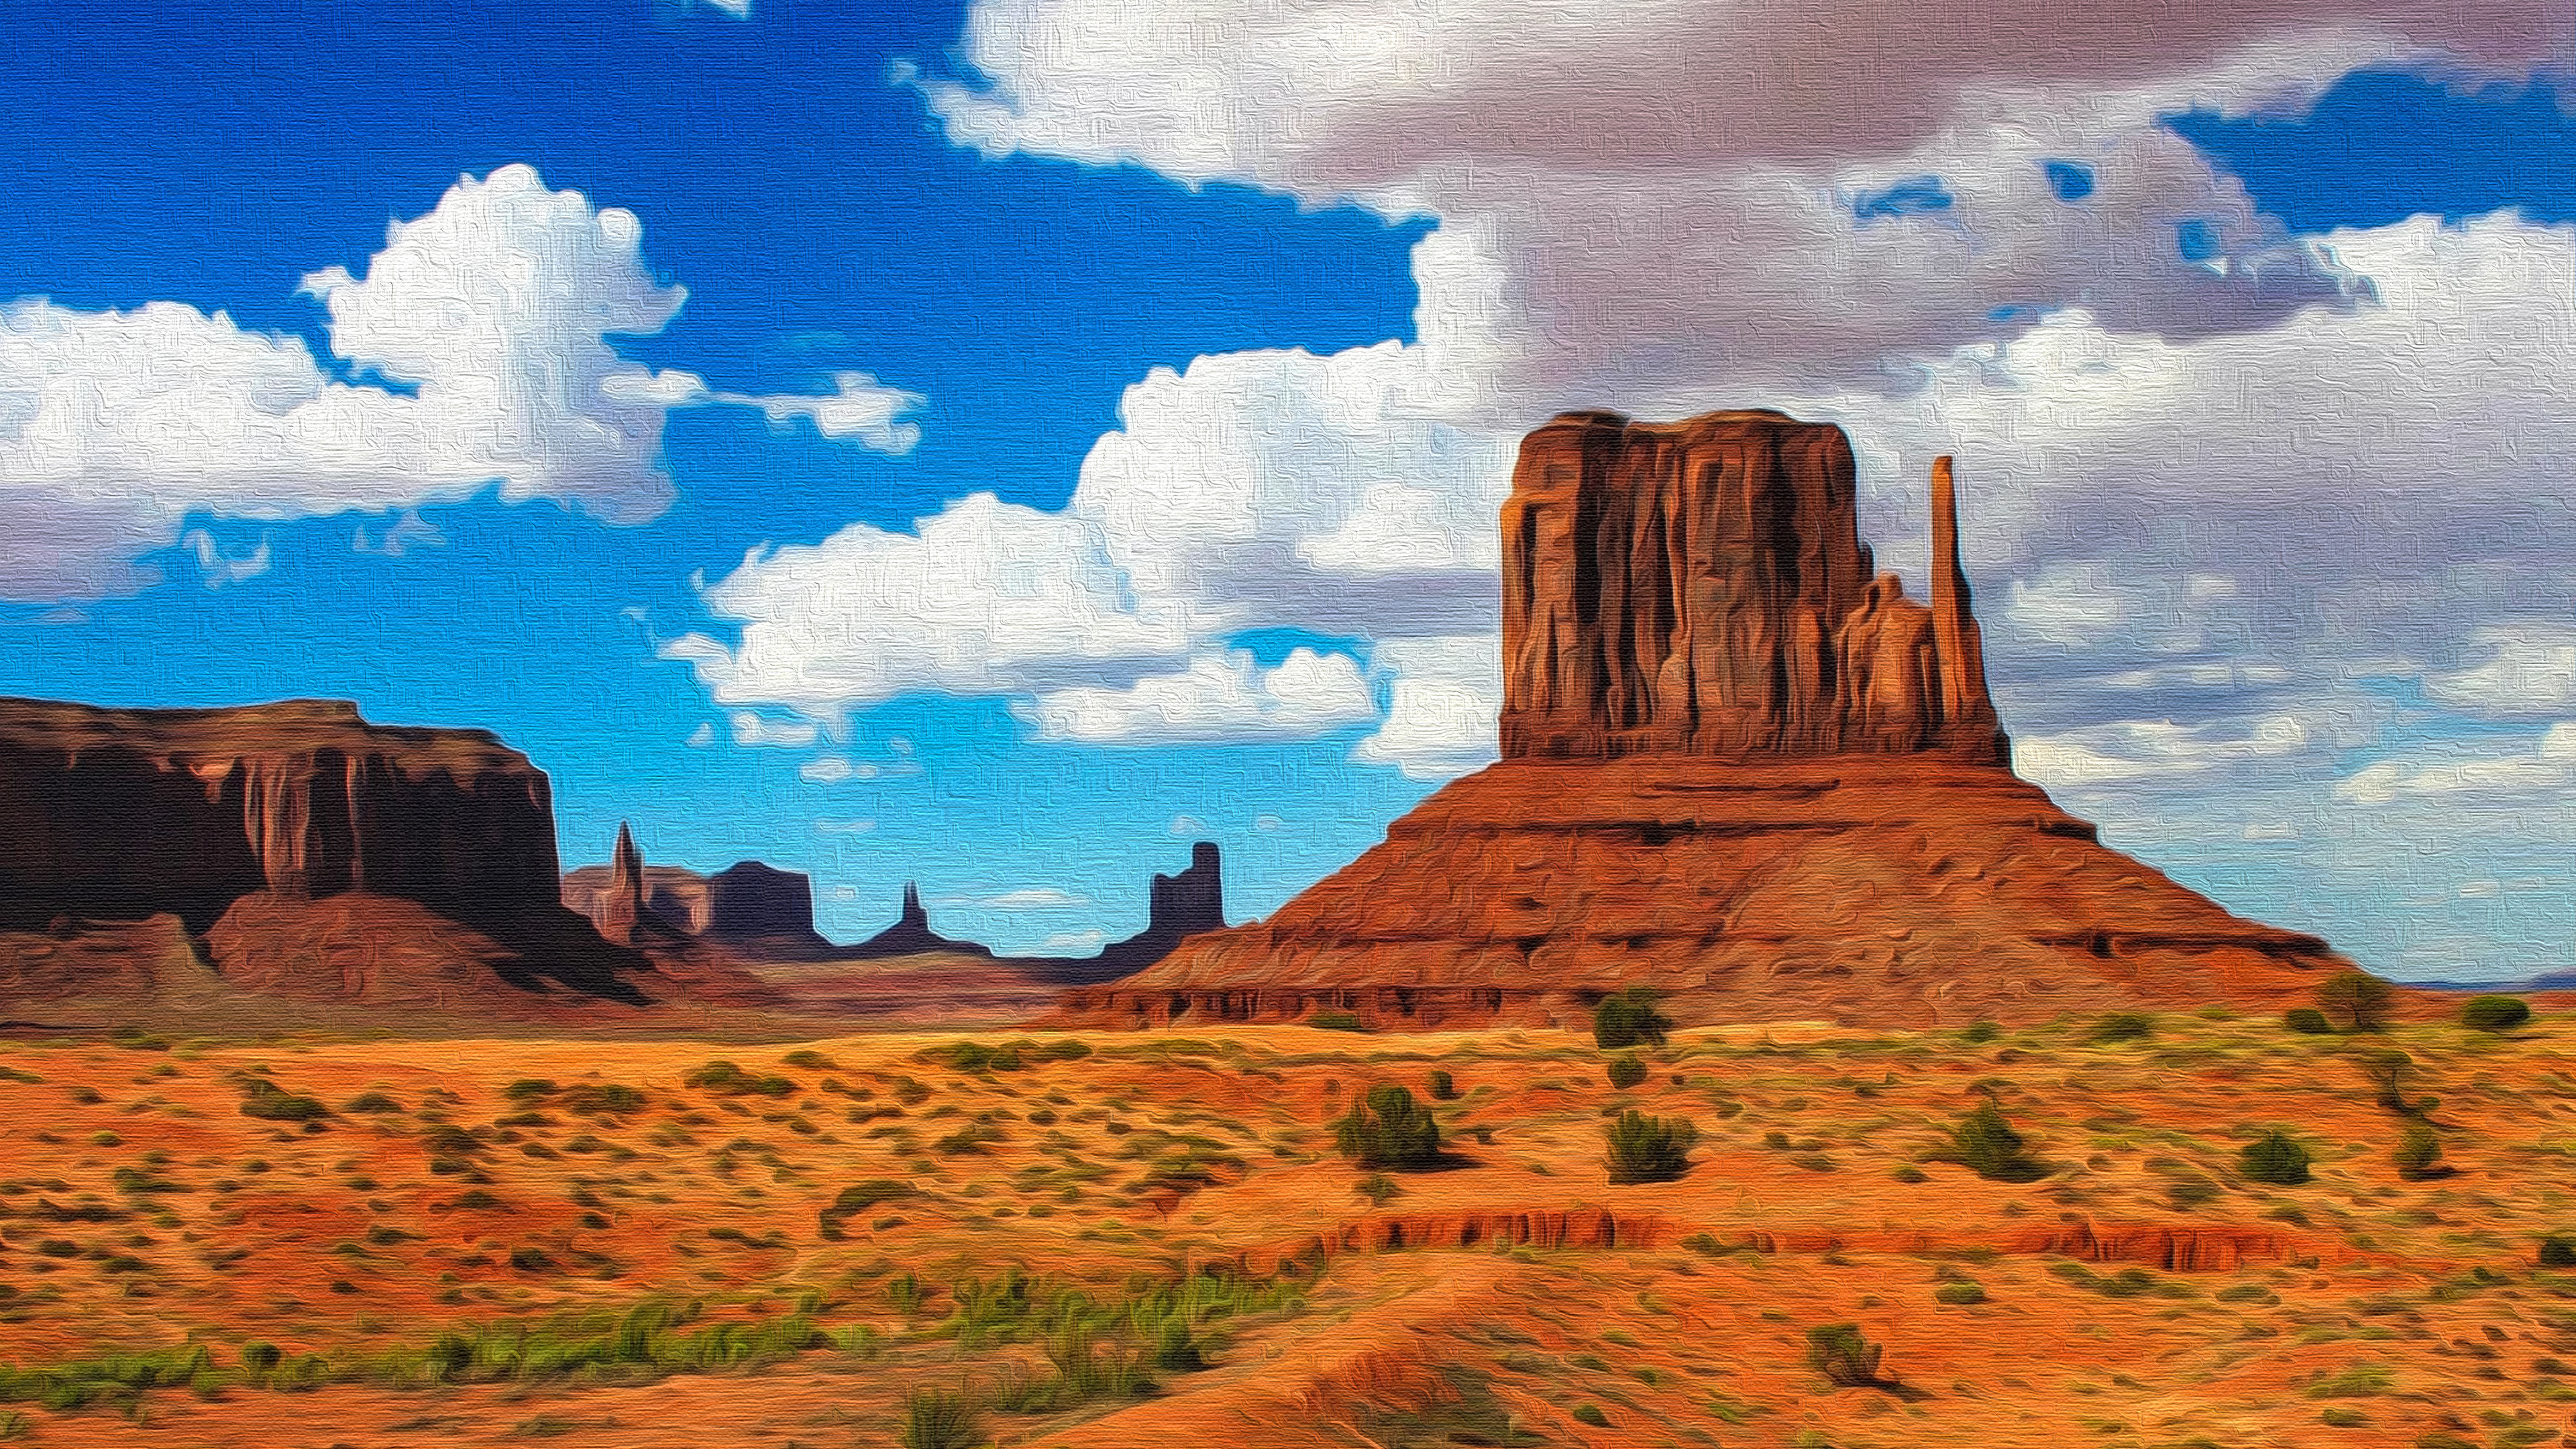 Monument Valley 4K wallpaper, Ultra HD background, Stunning nature, Desert landscapes, 3840x2160 4K Desktop